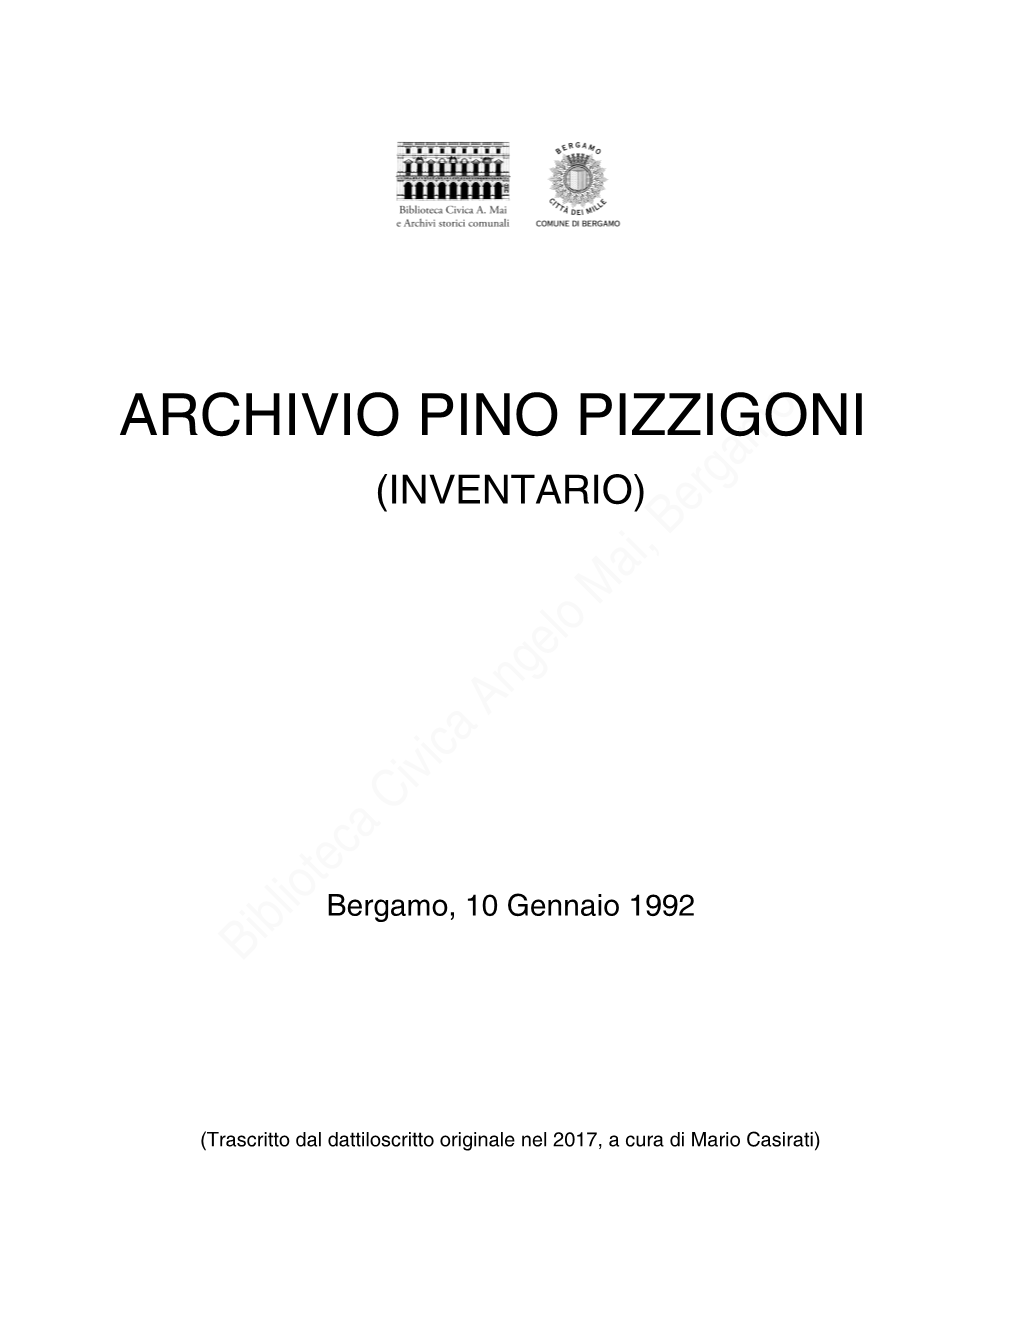 Archivio Pino Pizzigoni (Inventario)